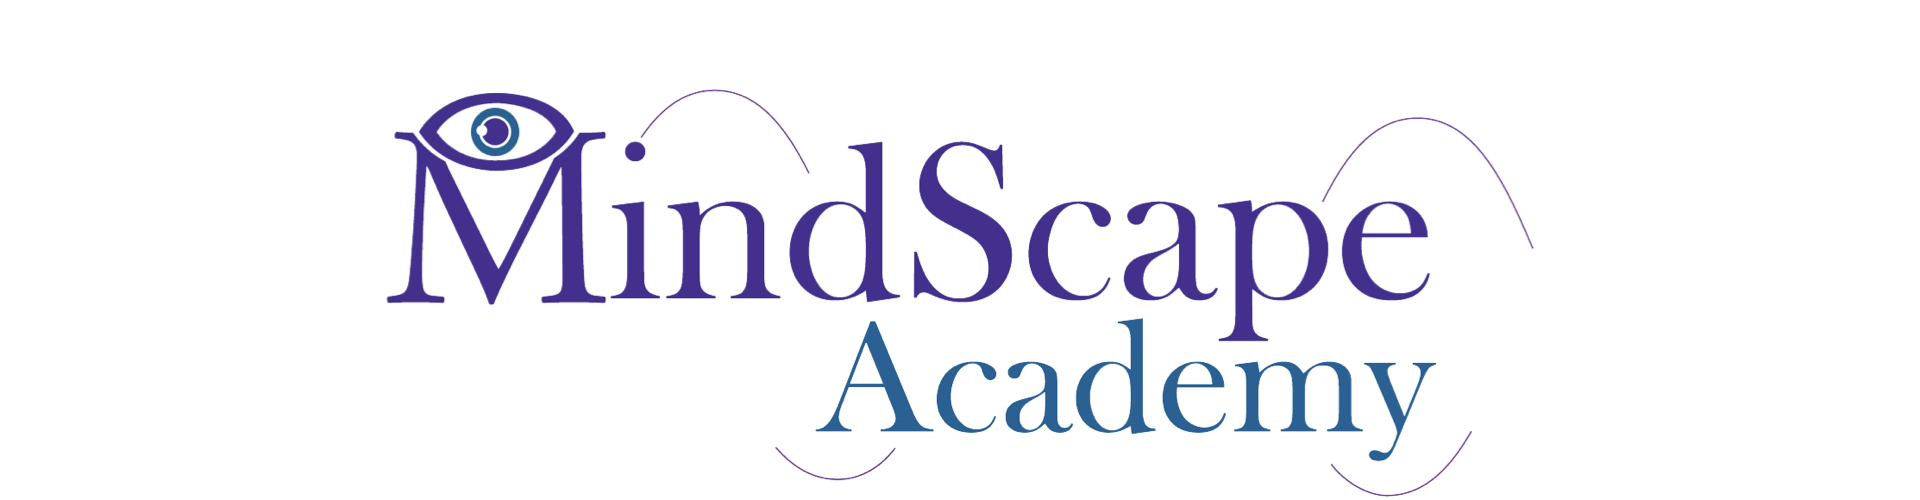 MindScape Academy Logo